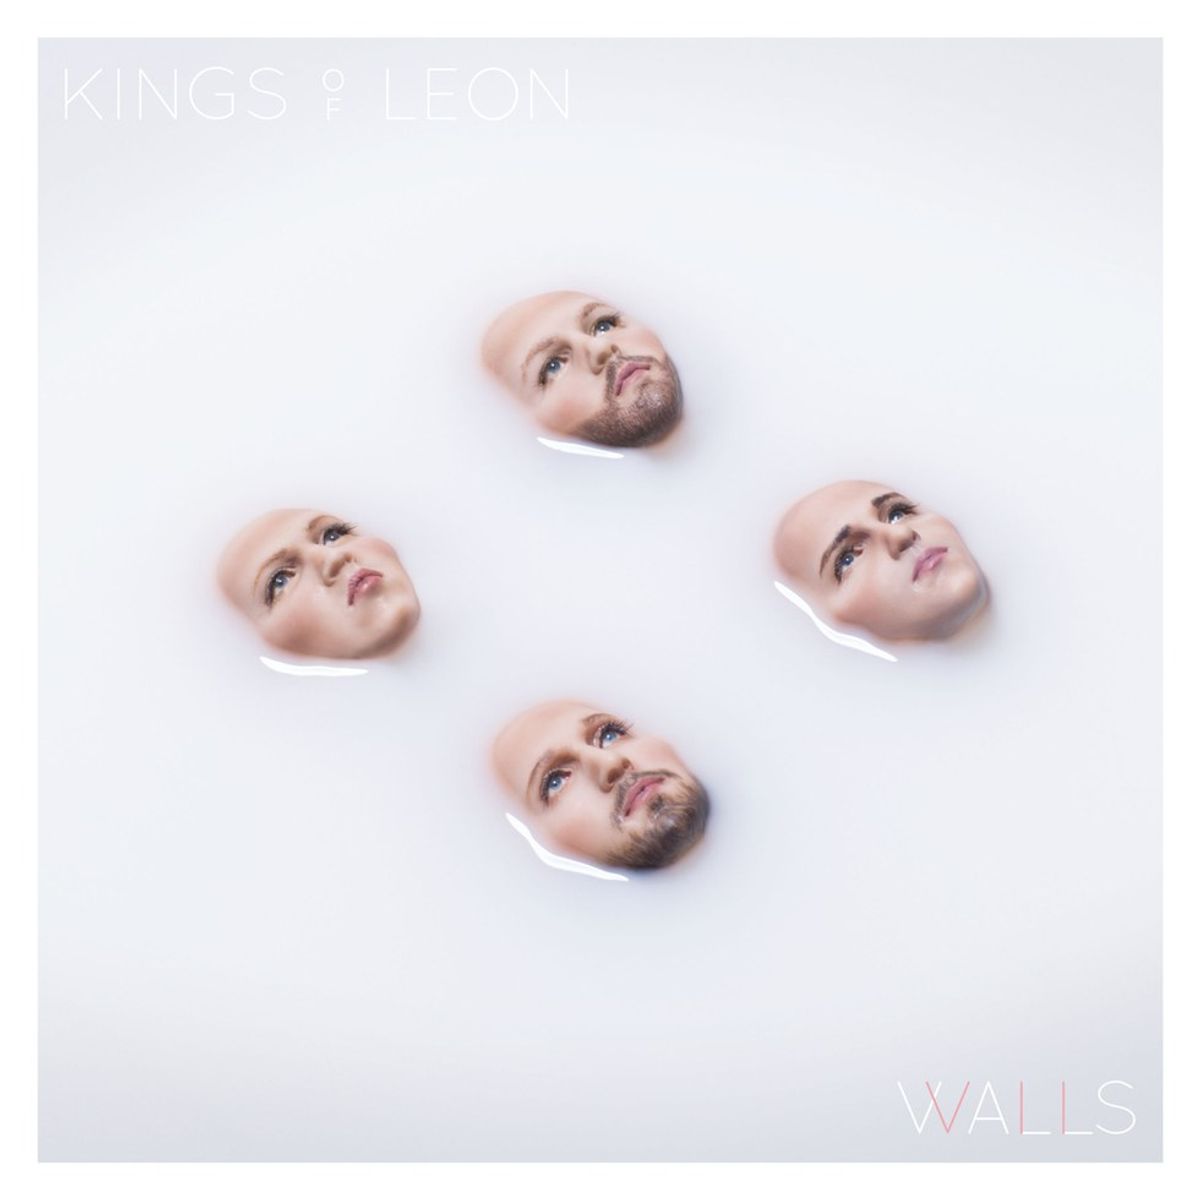 First Listen: Kings of Leon’s New Album, 'WALLS'